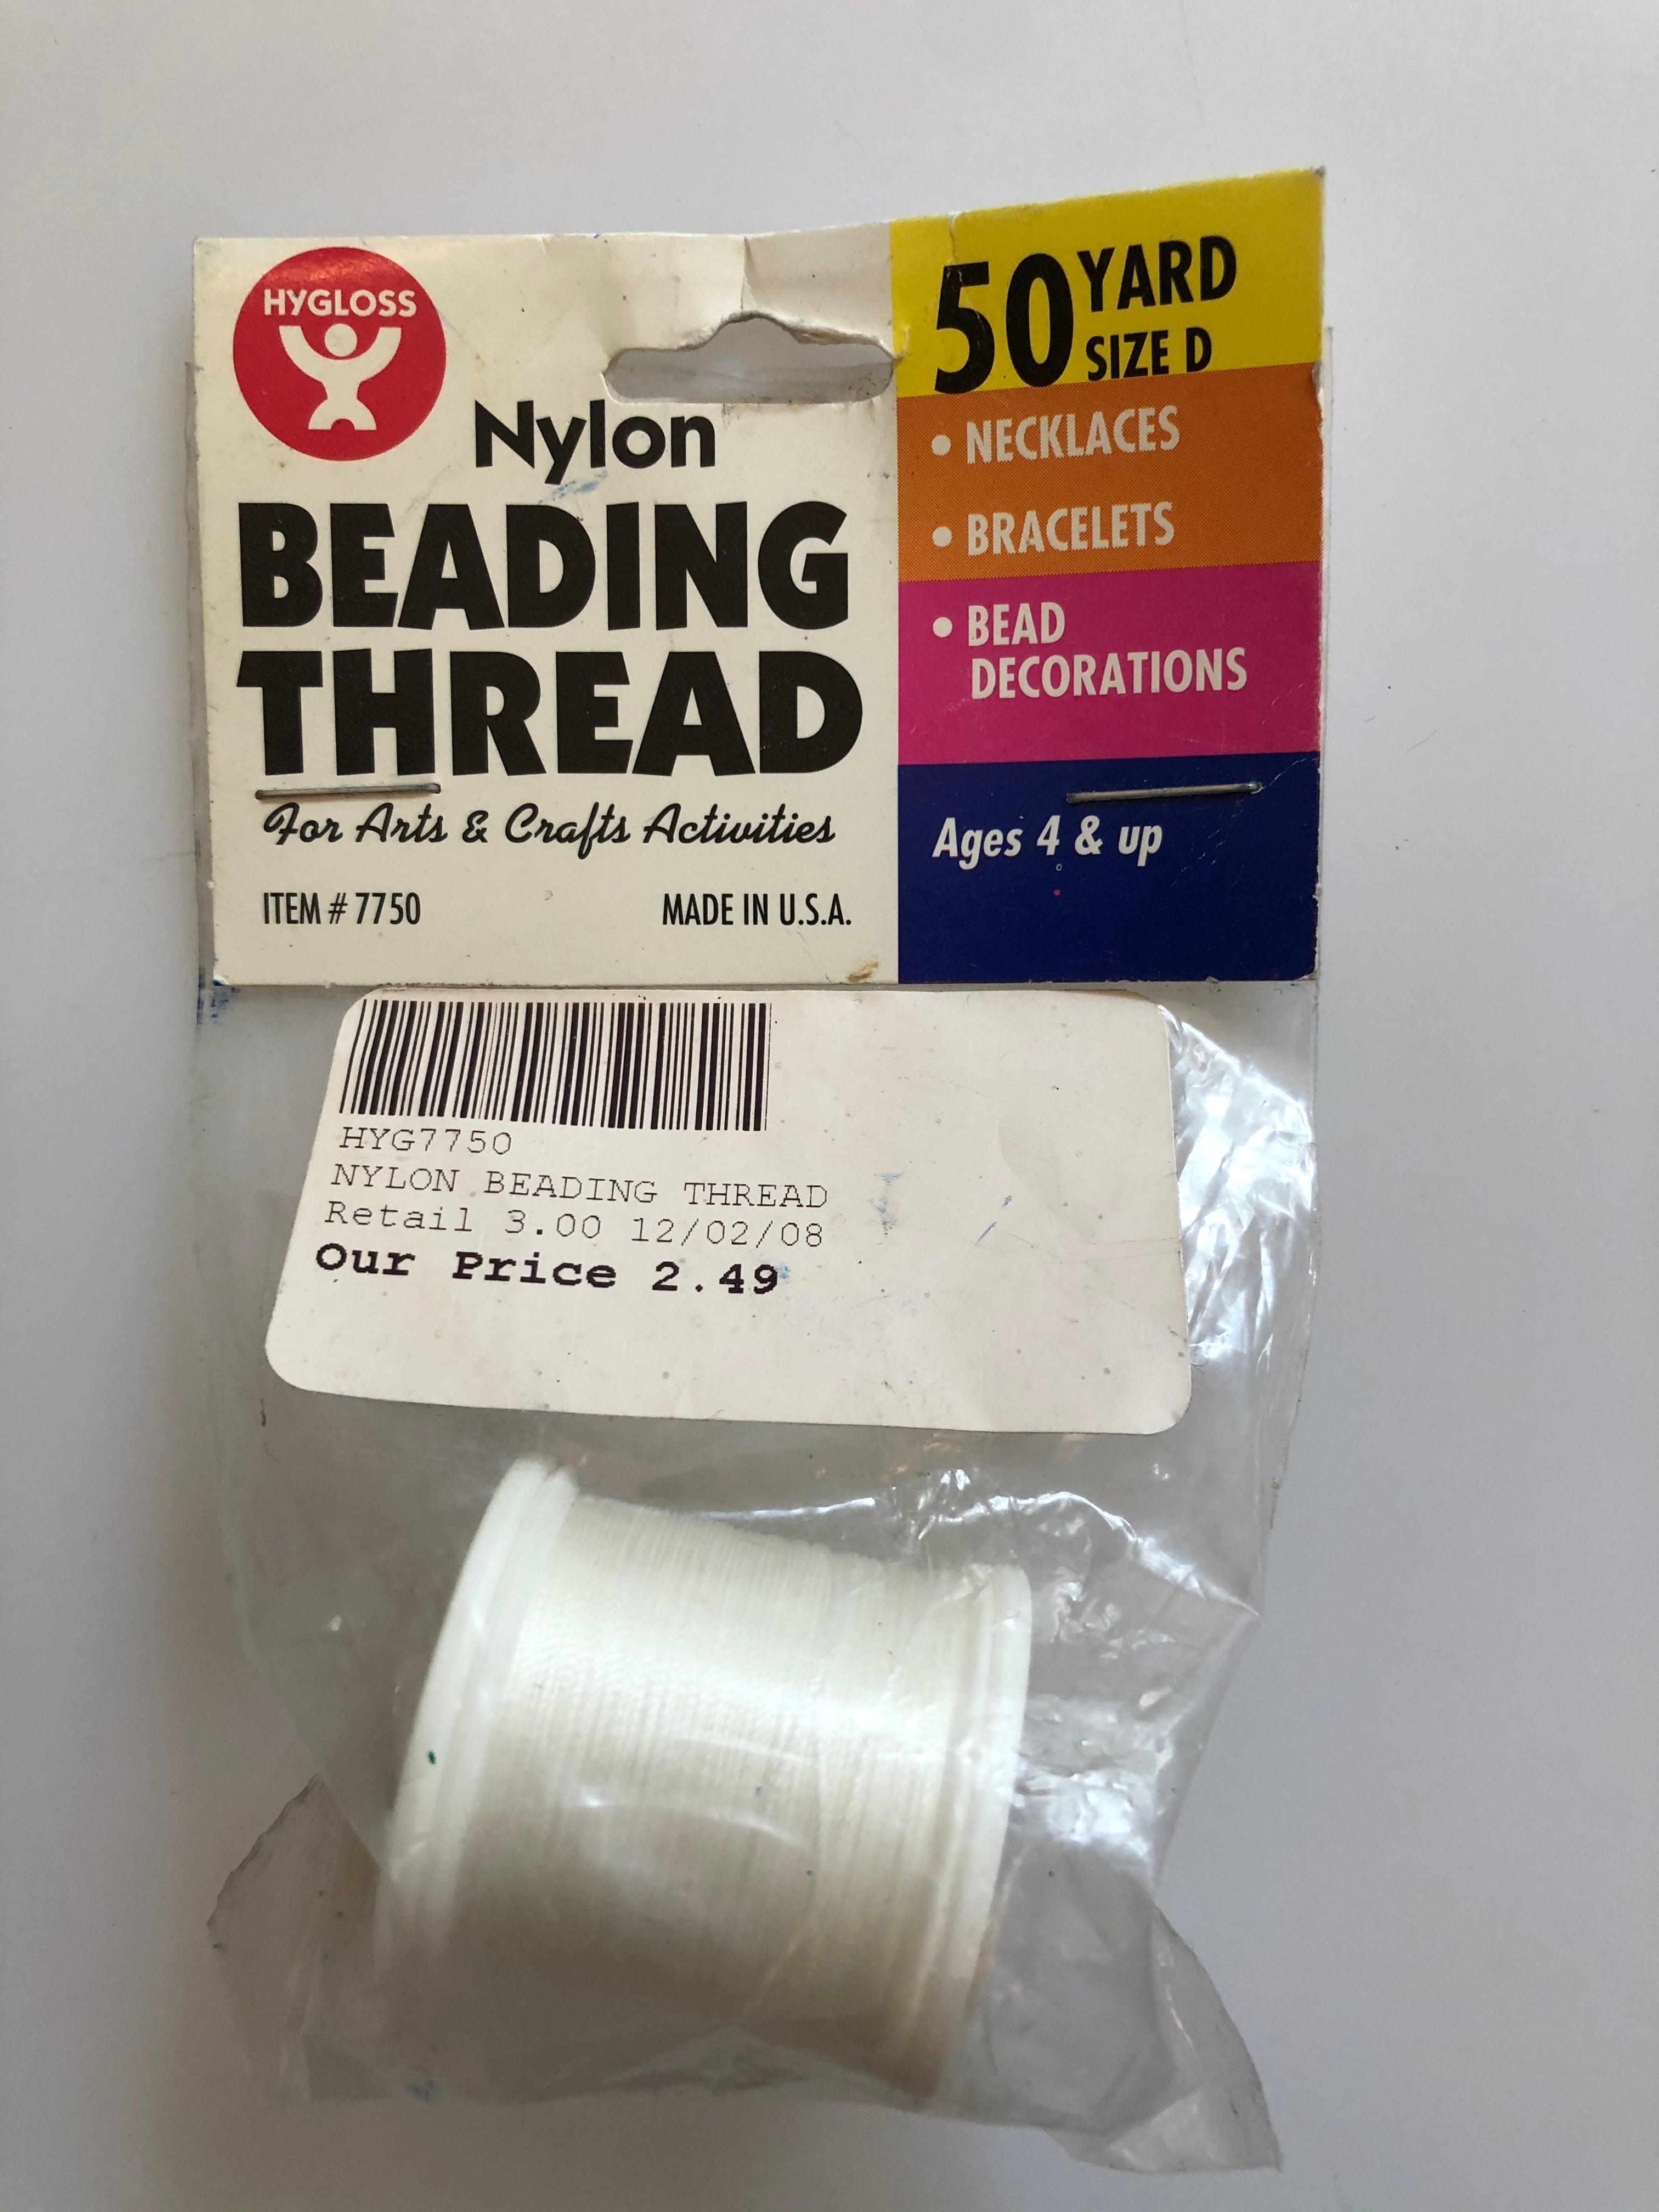 HyGLoss Nylon Beading Thread HYG7750